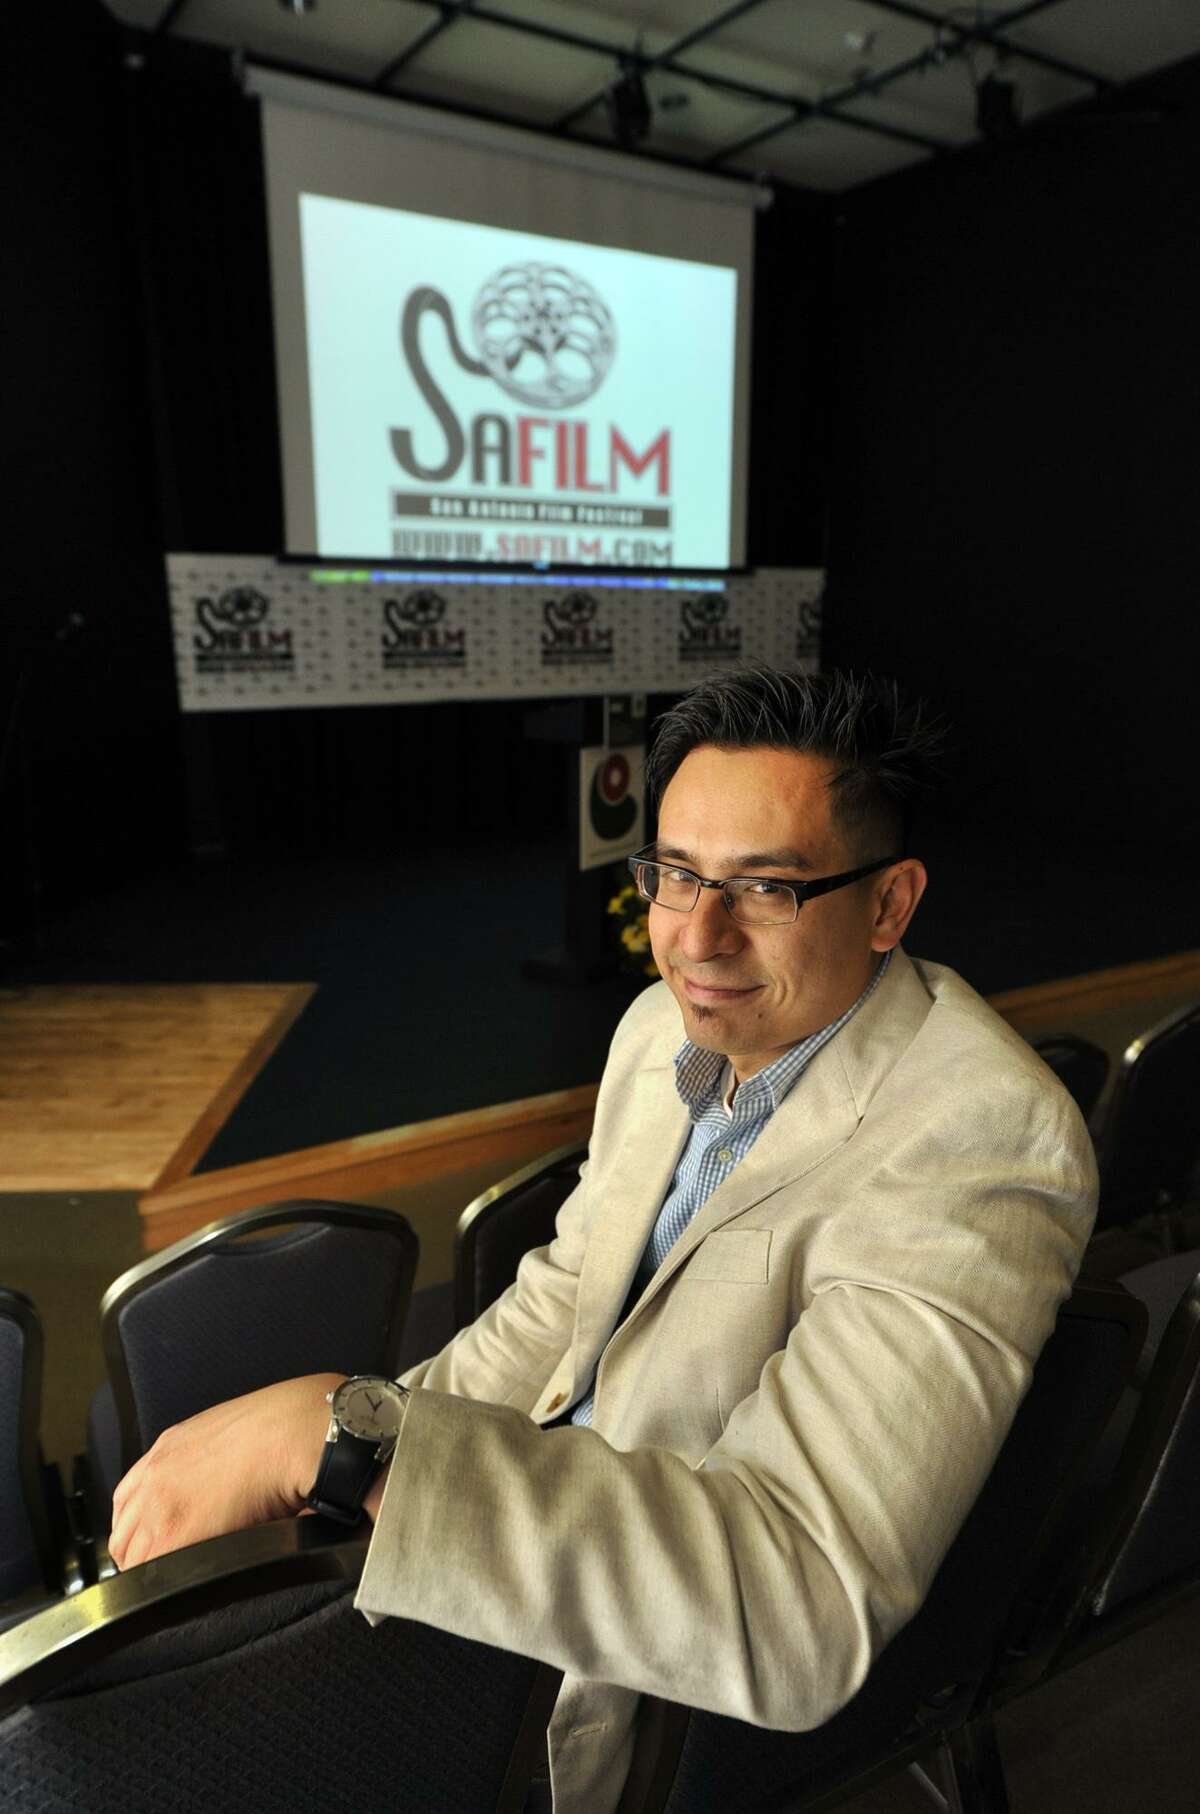 The SA Film Festival’s Founder and Executive Director Adam Rocha.